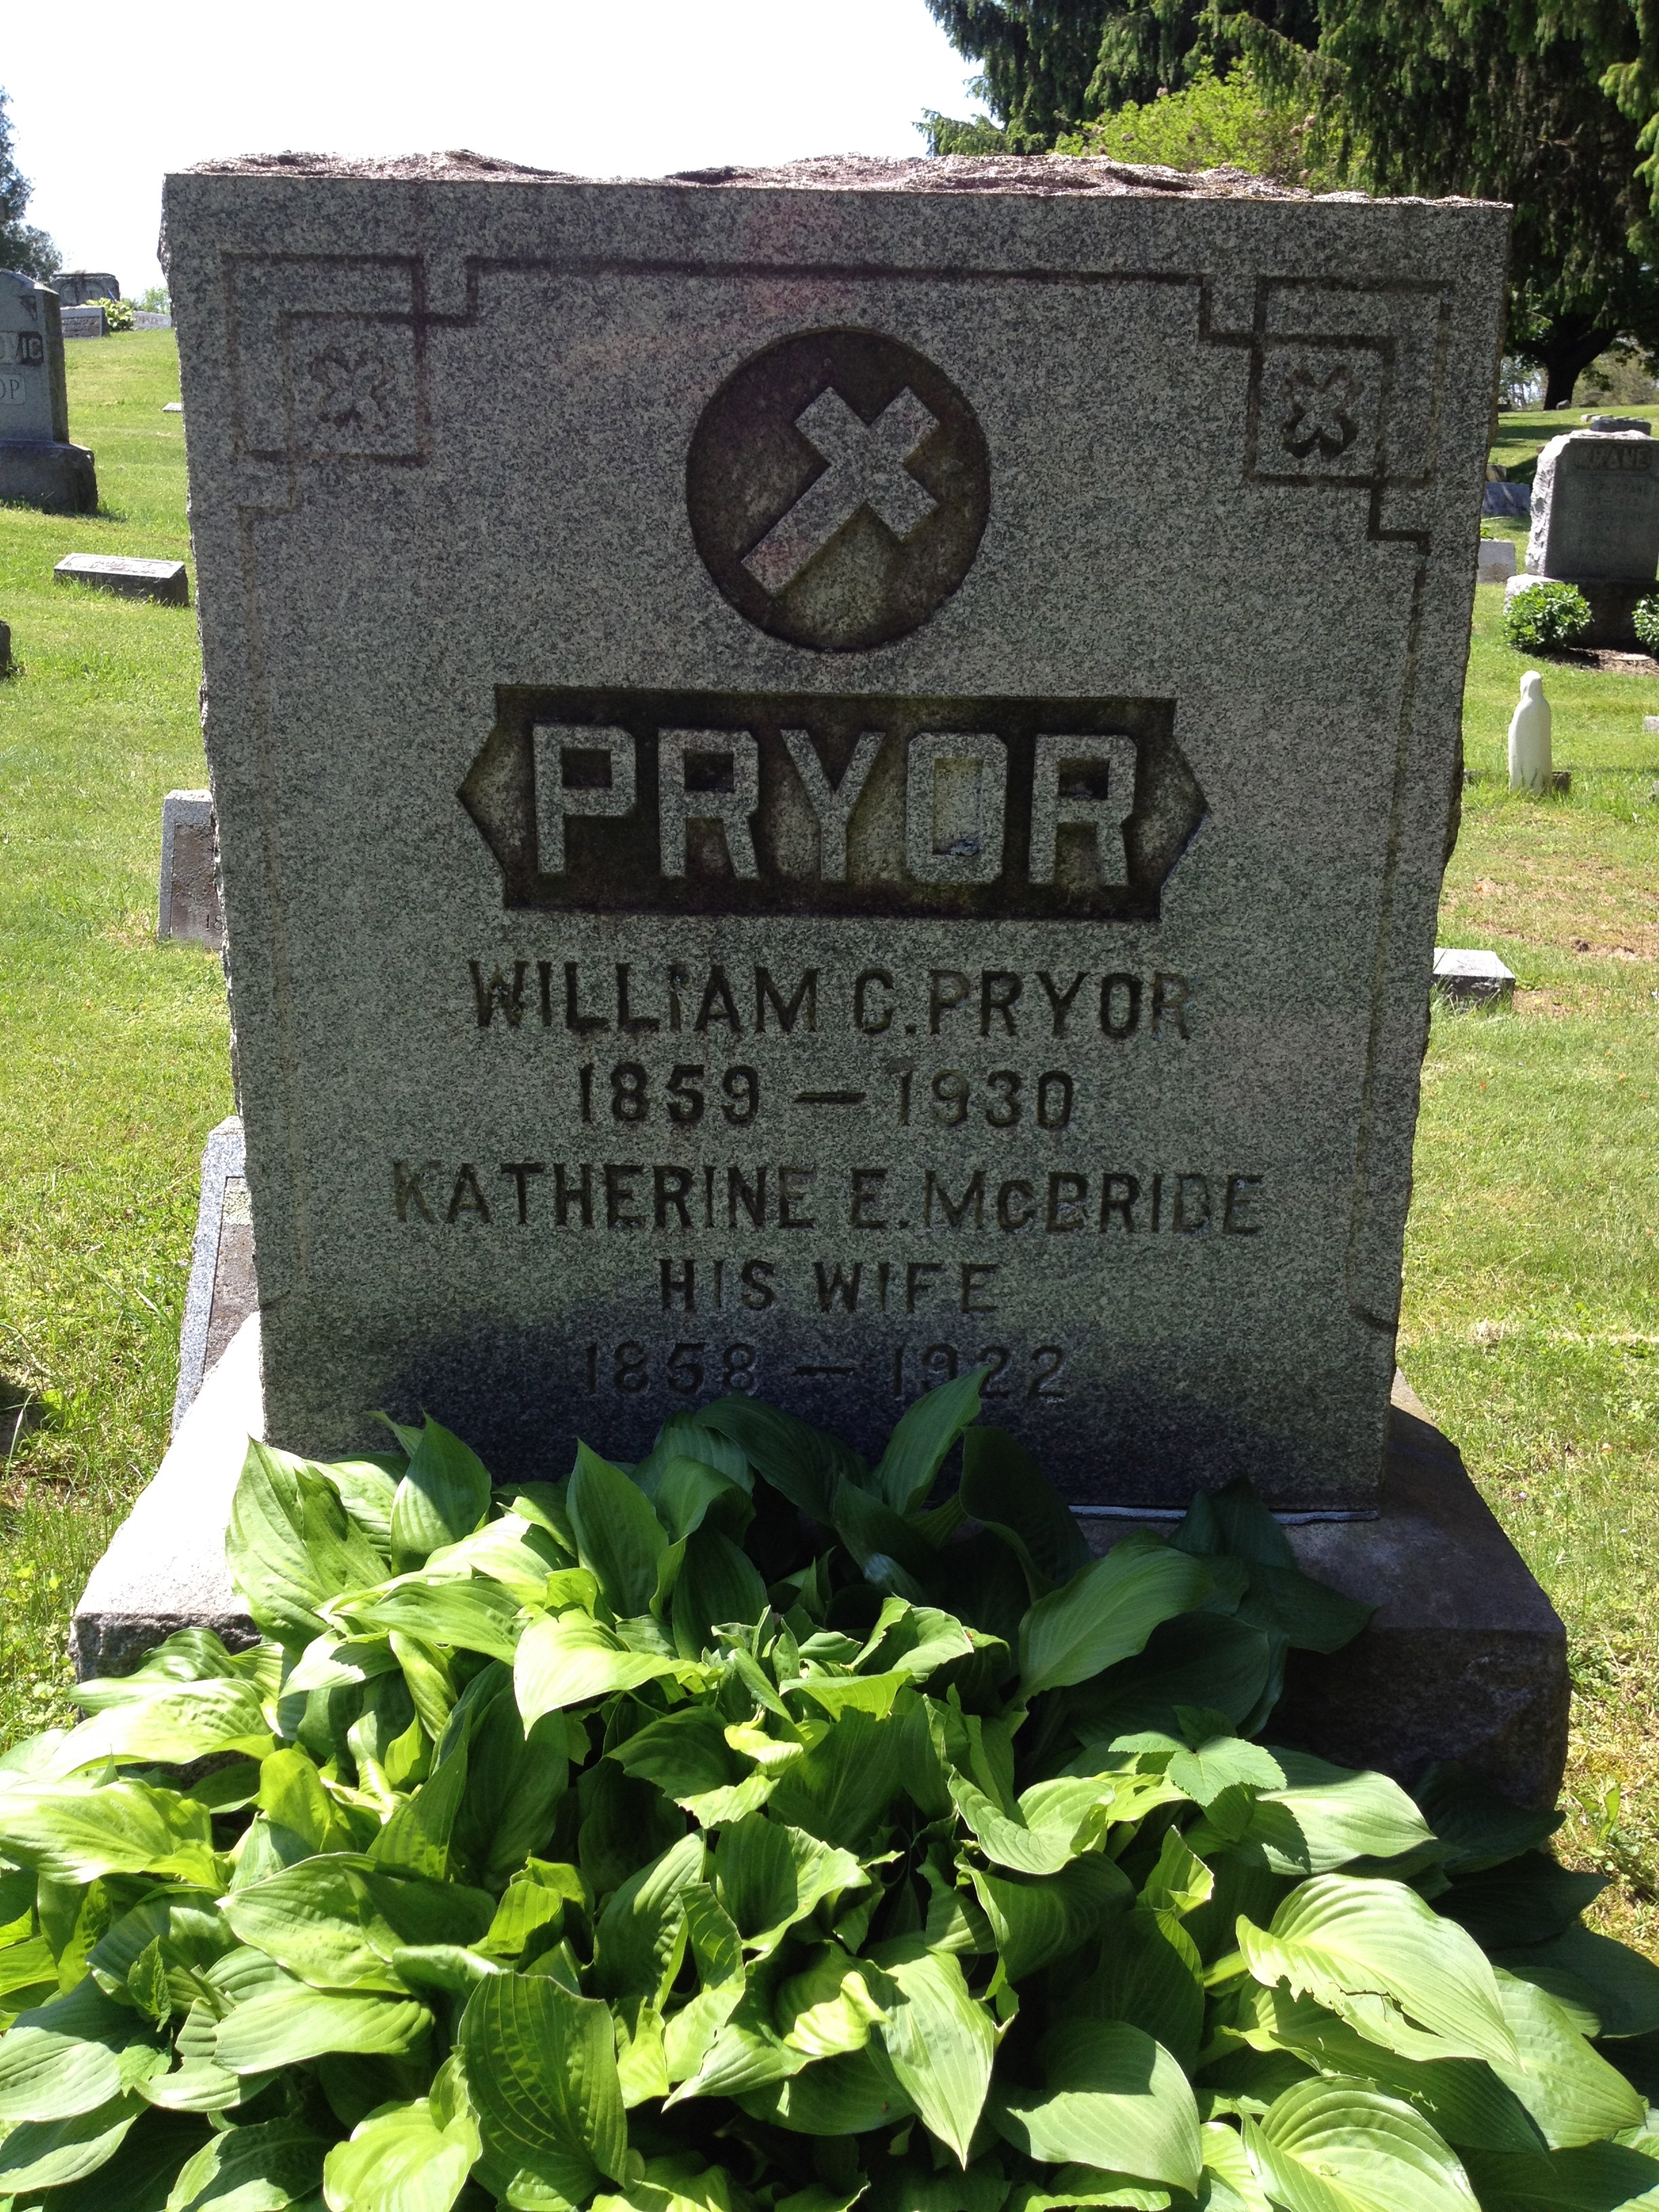 Headstone of William C. Pryor and Katherine E. McBride